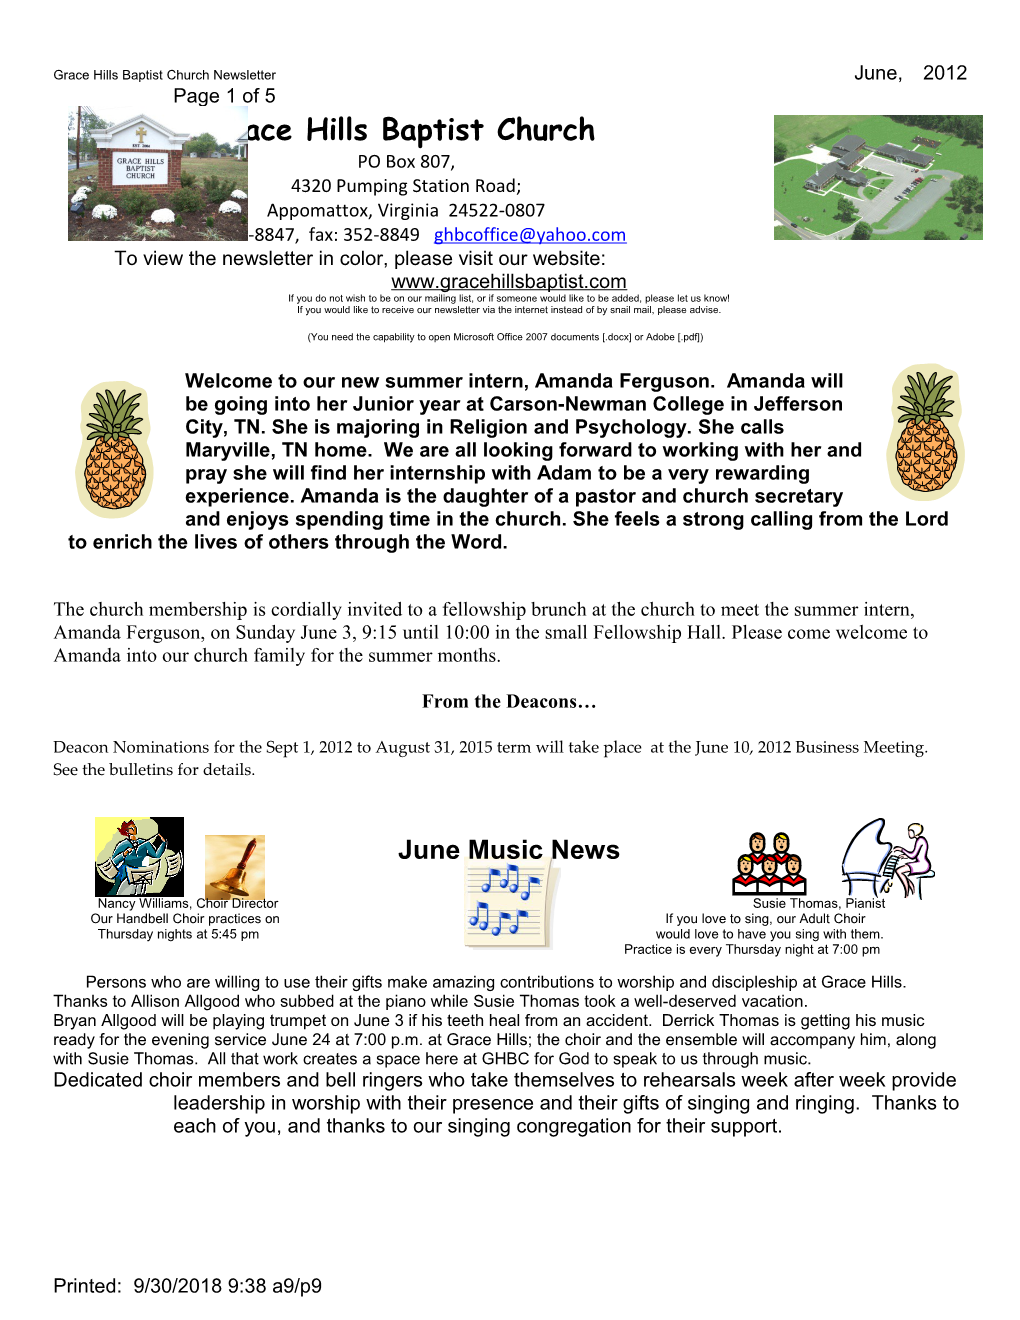 Grace Hills Baptist Church Newsletter June, 2012 Page 1 of 4